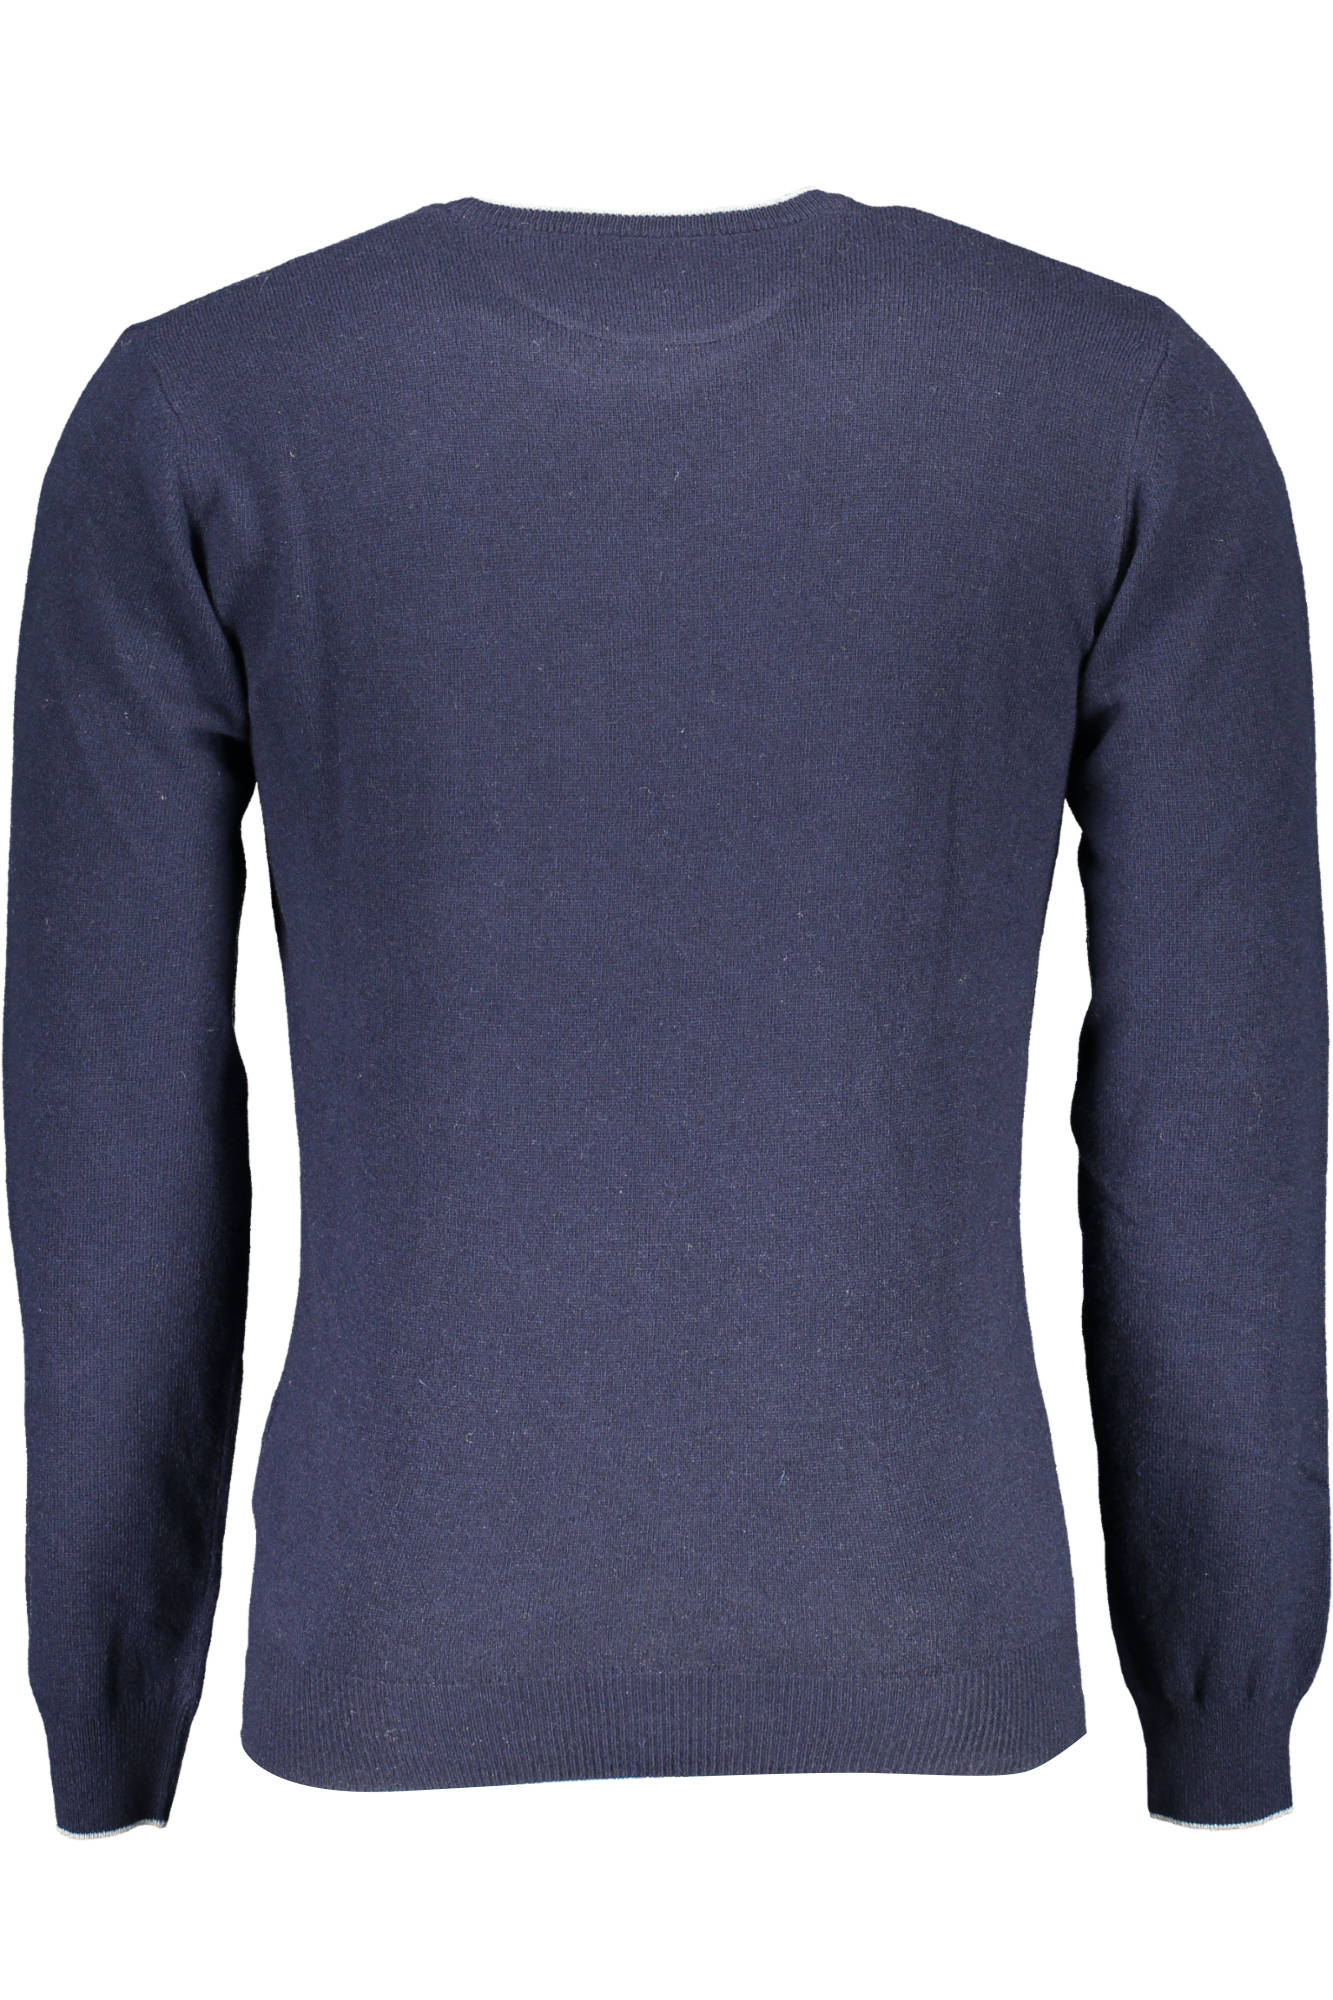 U.S. POLO ASSN. Blue Sweater - Fizigo